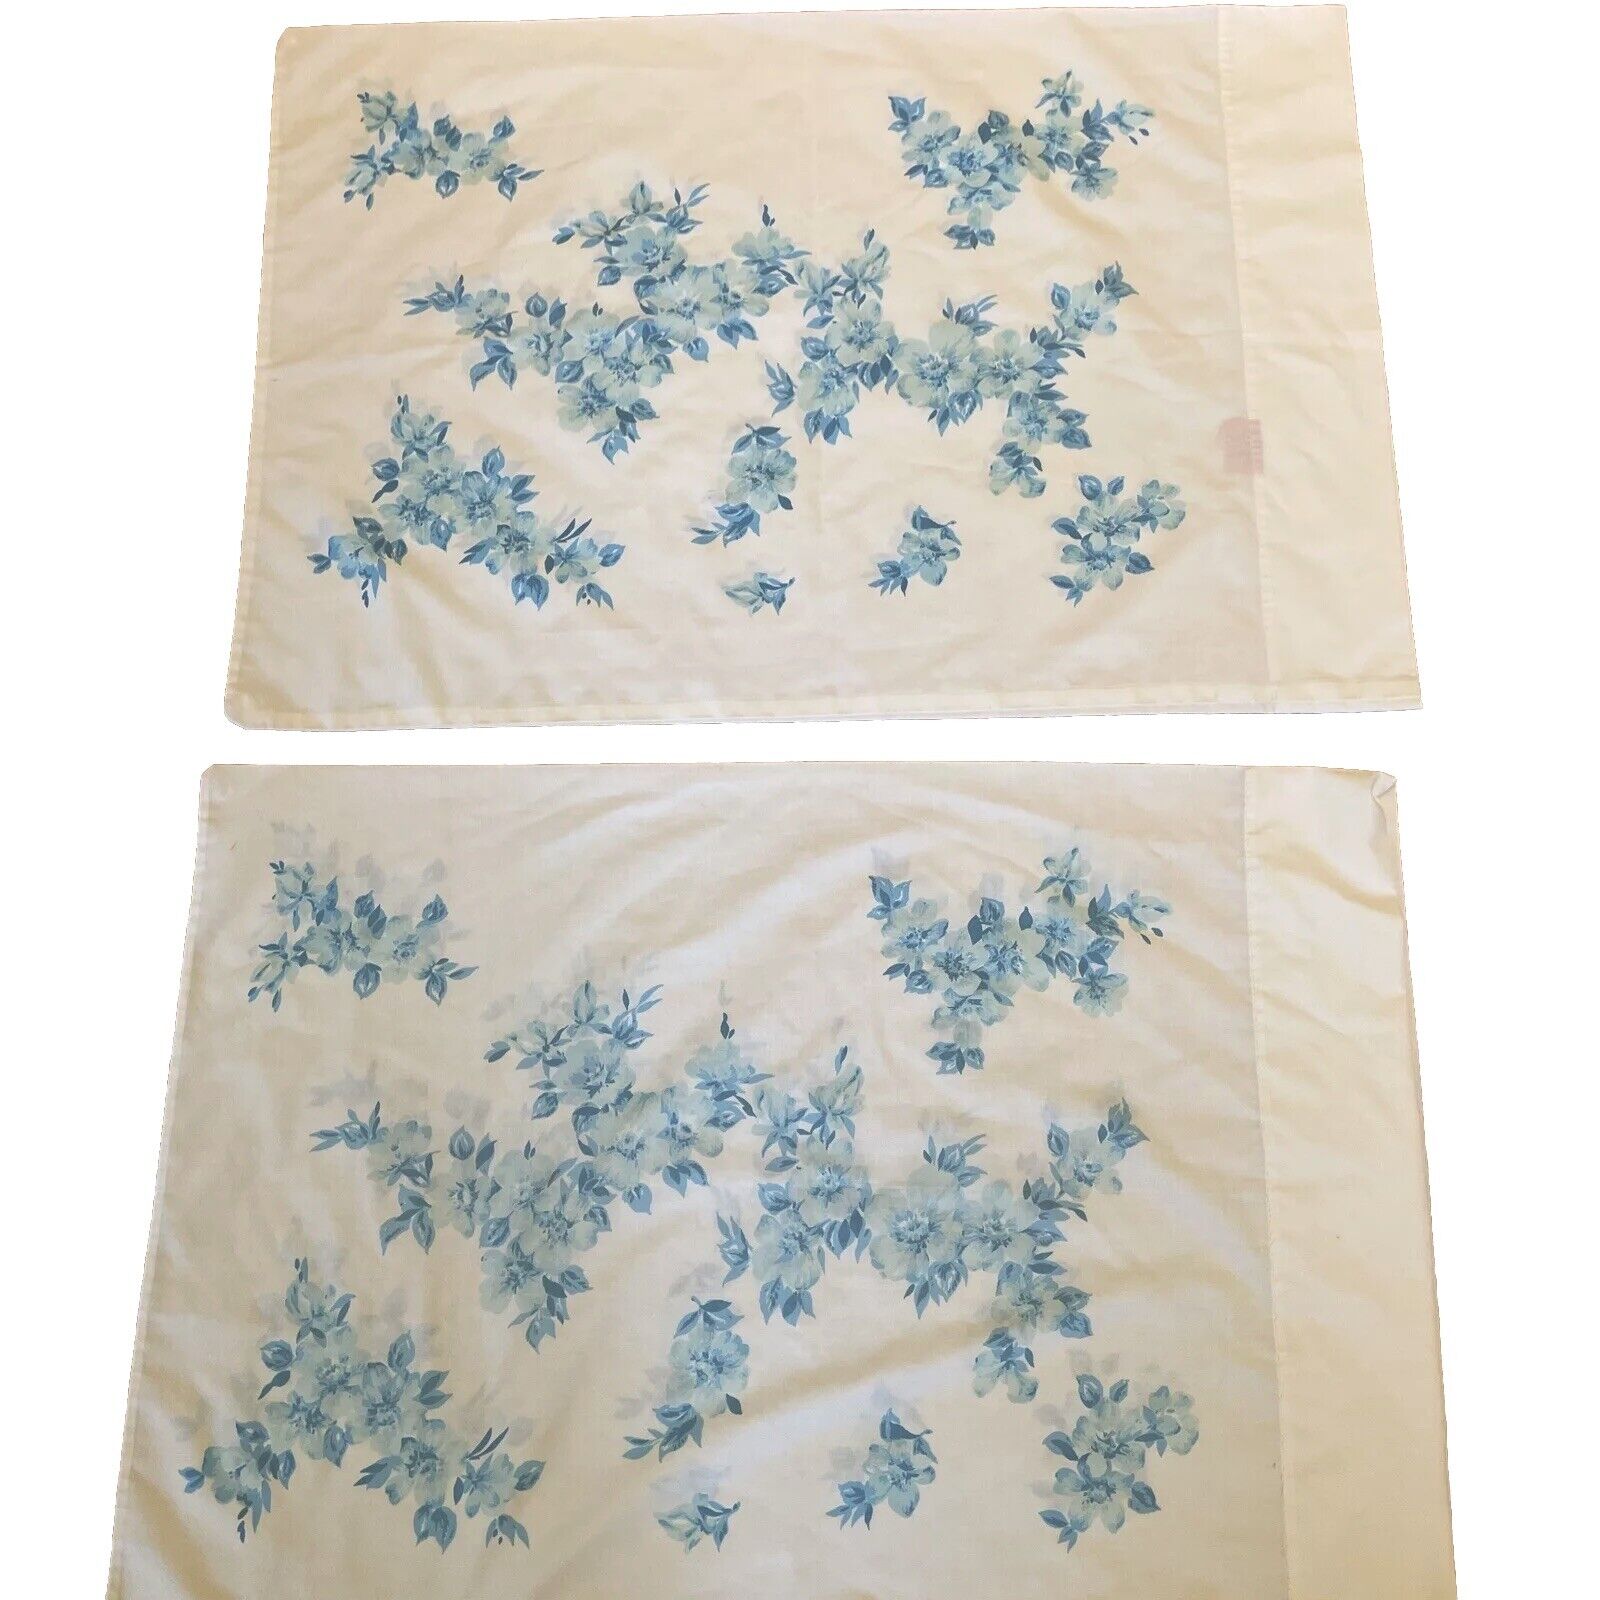 Vintage Sears  Flower Perma Prest 30X20 Standard Pillowcase Set of 2 Blue Floral